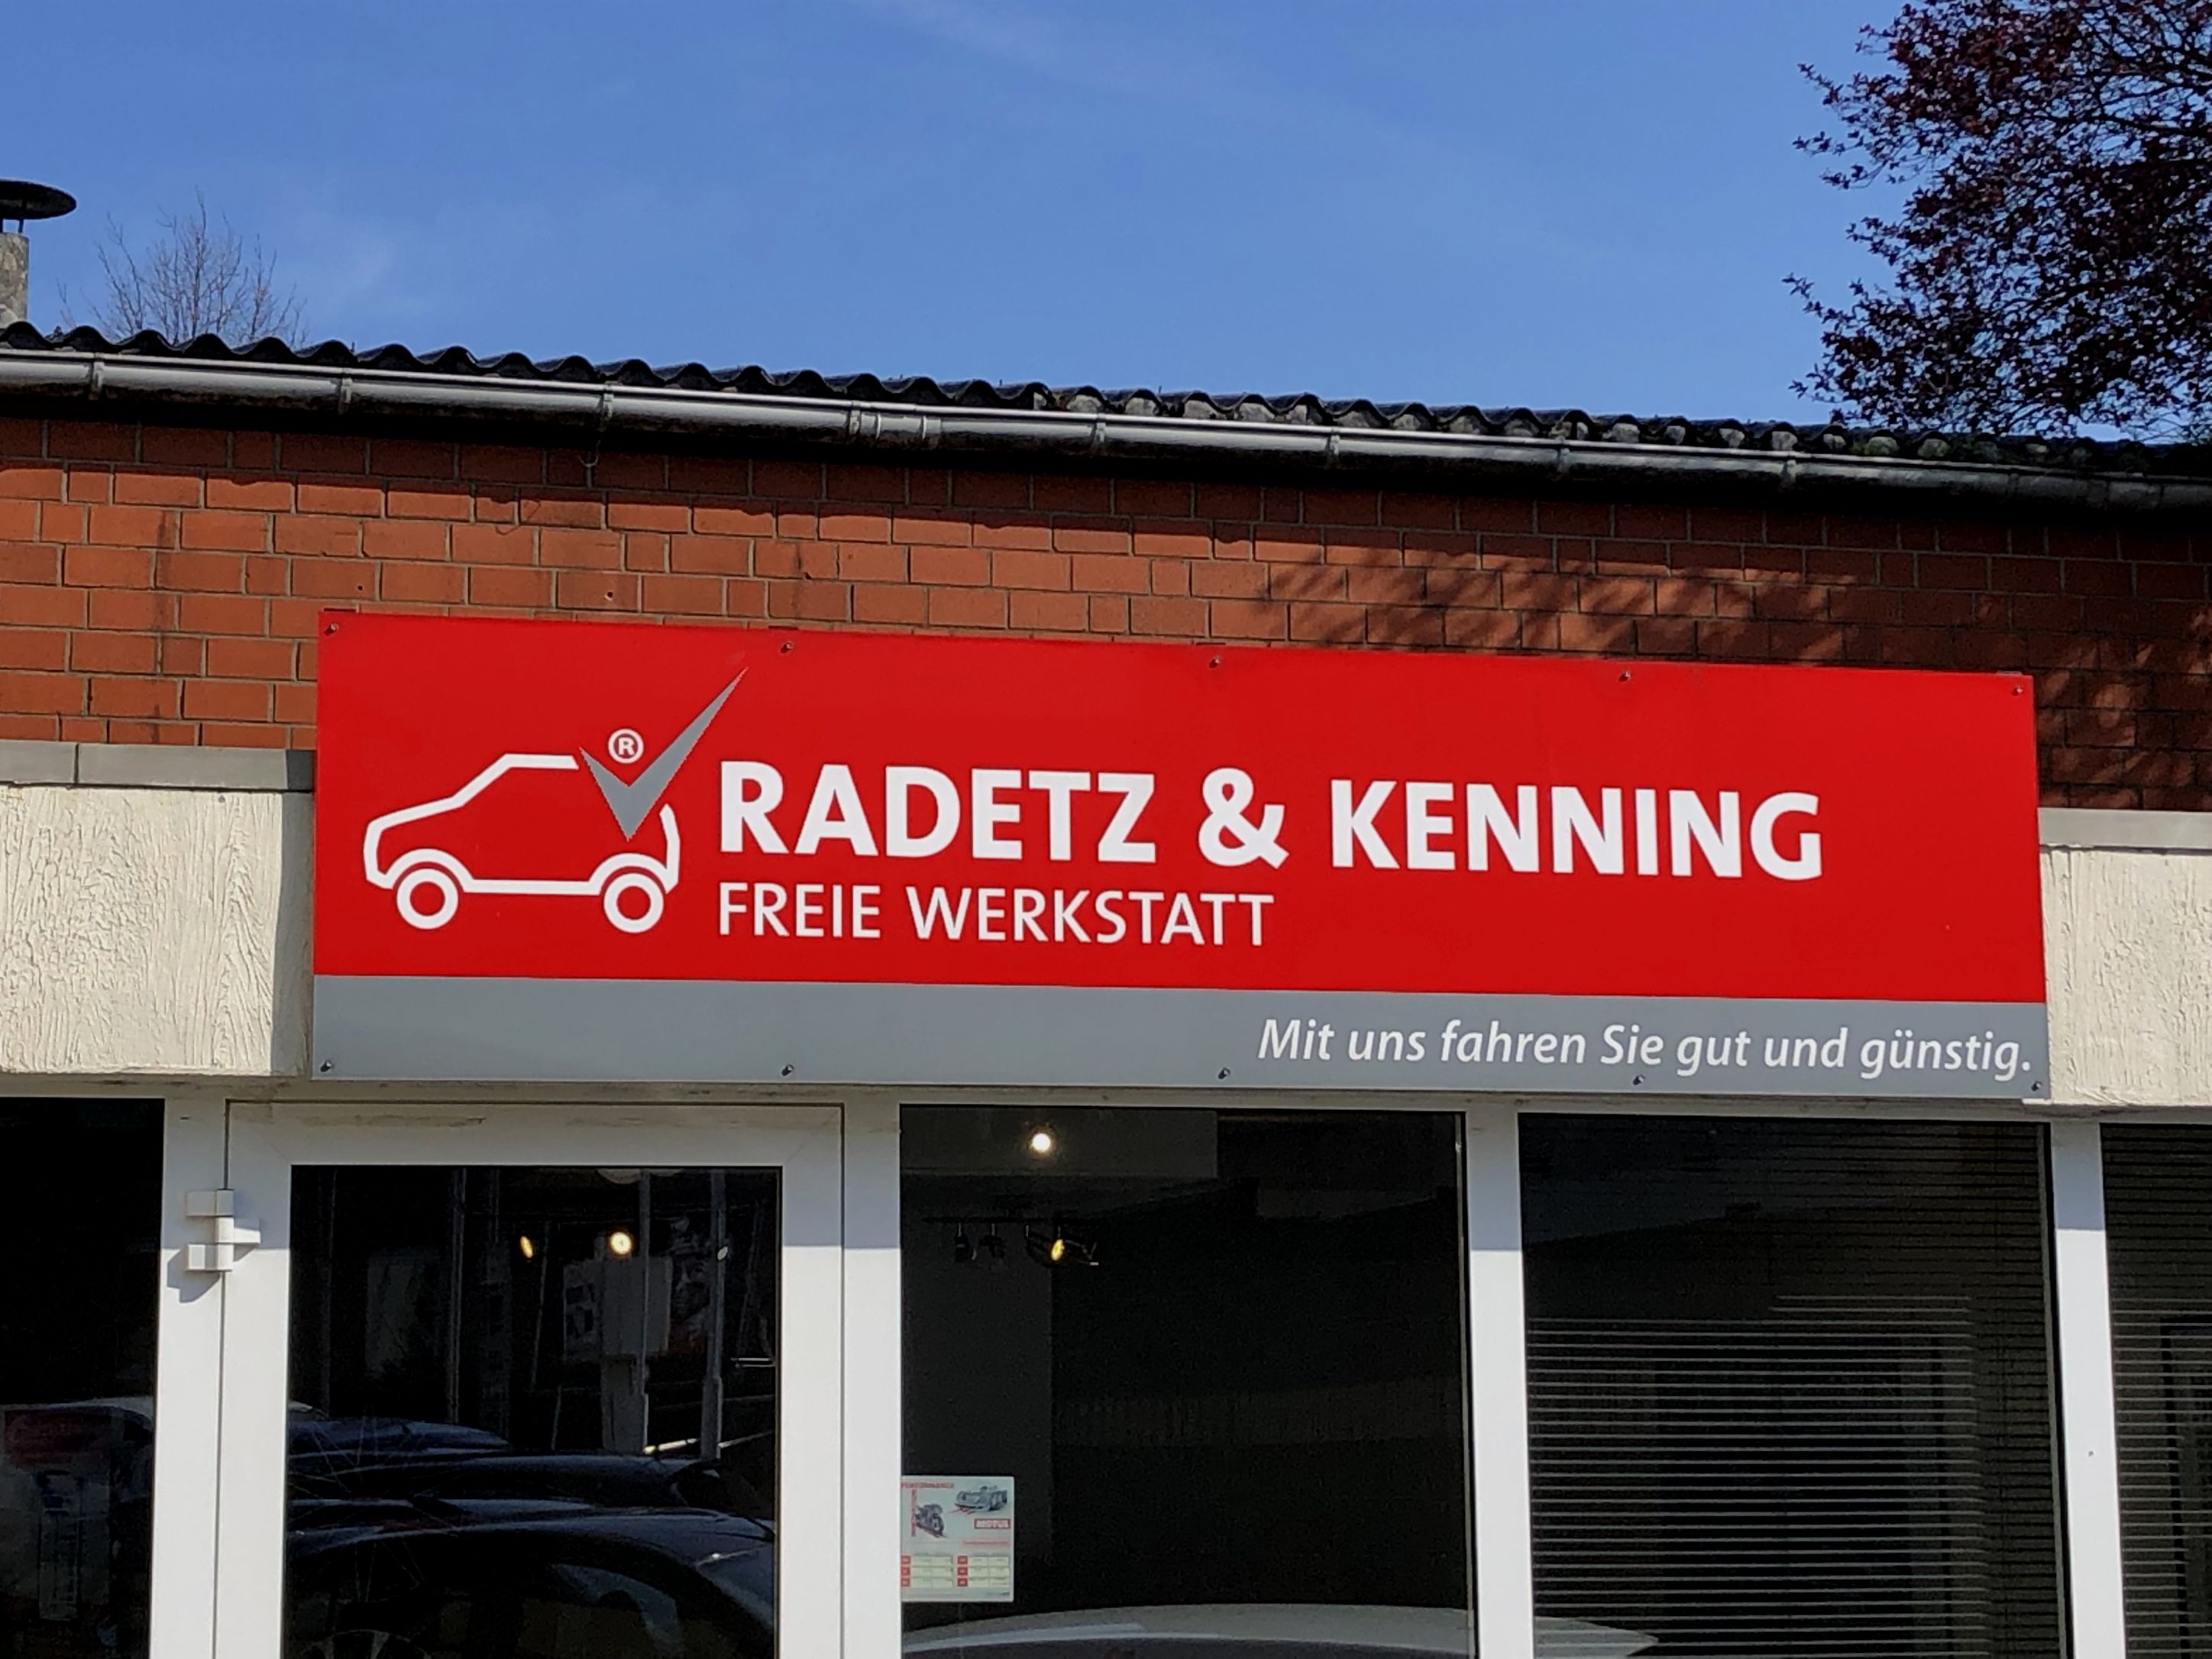 Radetz & Kenning